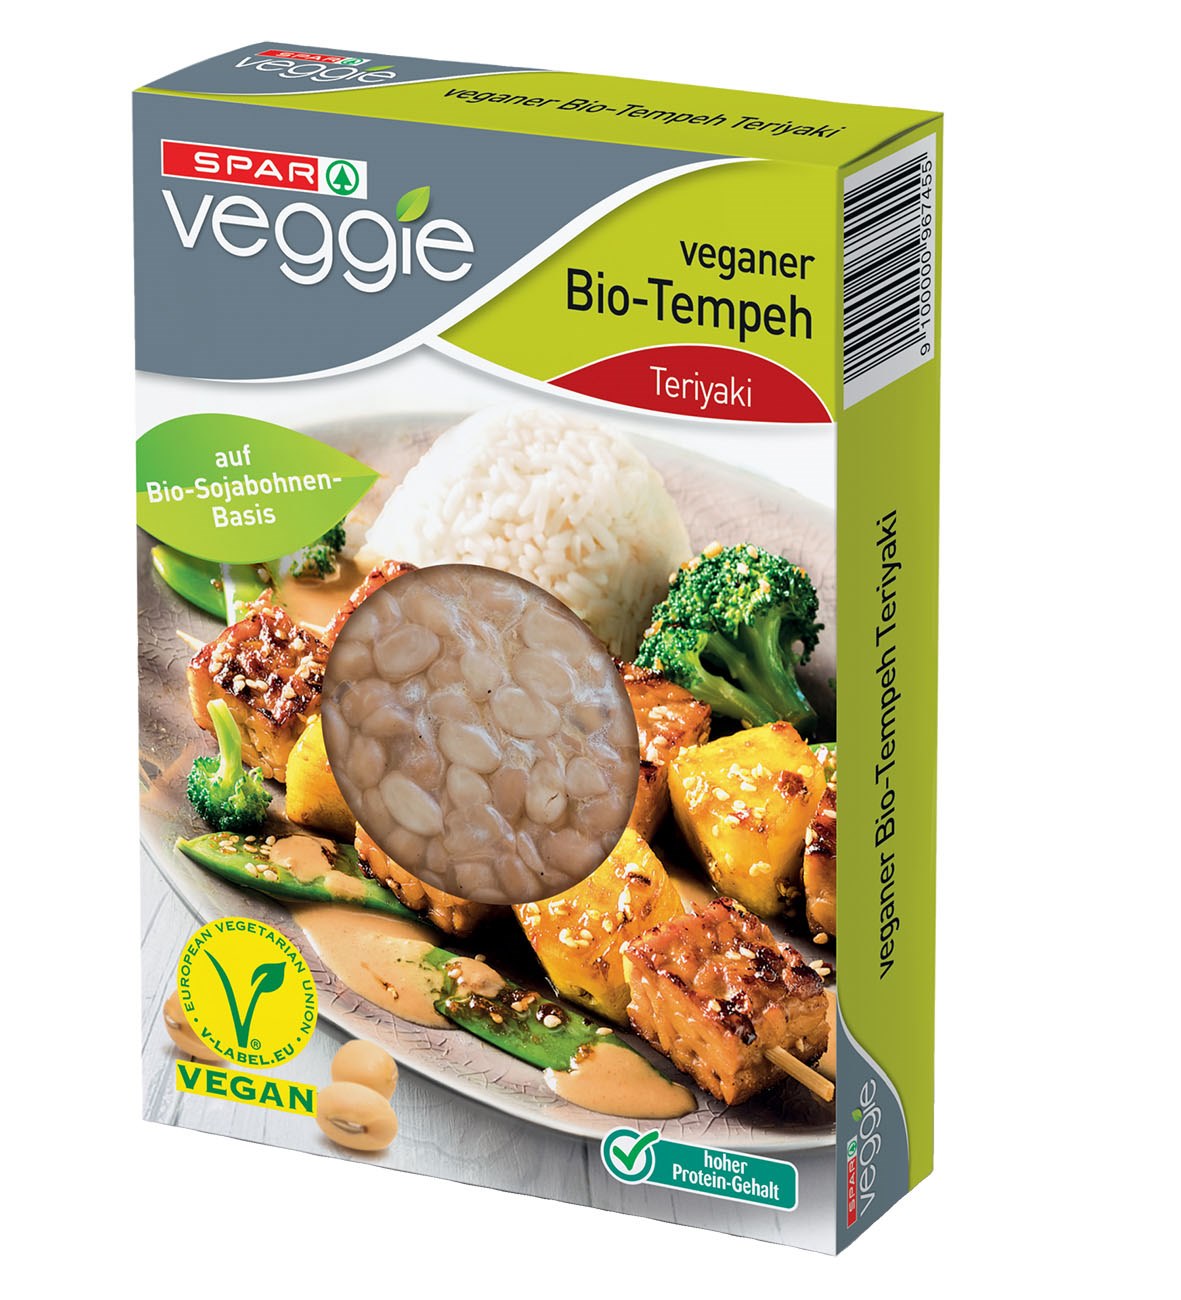 SPAR Veggie veganer Bio-Tempeh Teriyaki